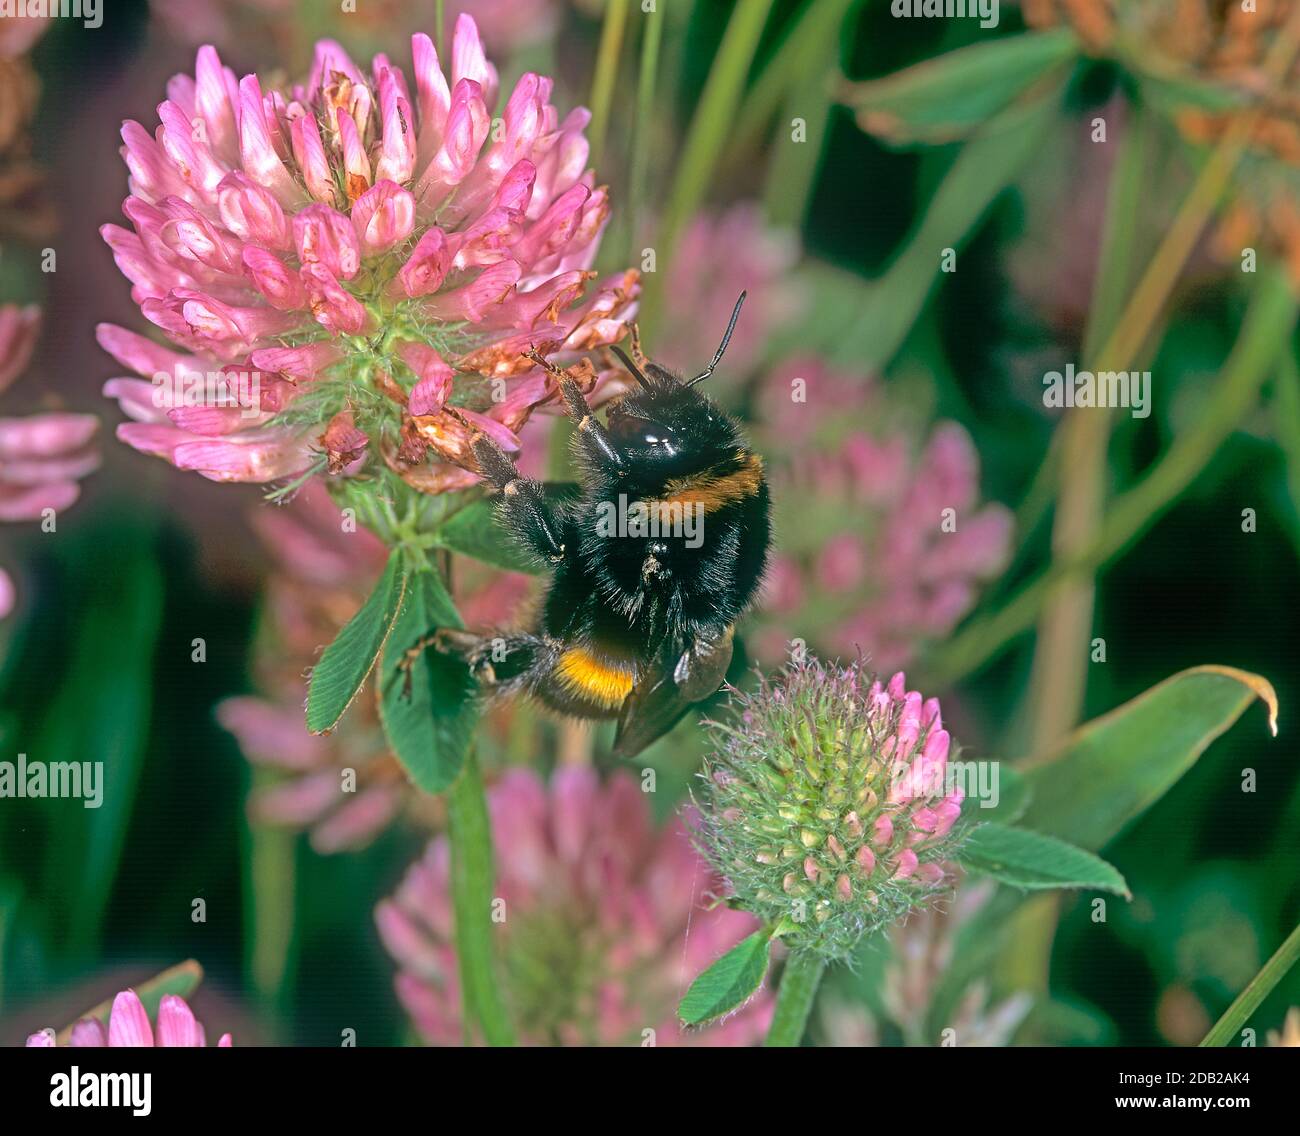 Buff-tailed Bumblebee (Bombus terrestris) foraging on Red Clover (Trifolium pratense). Germany Stock Photo